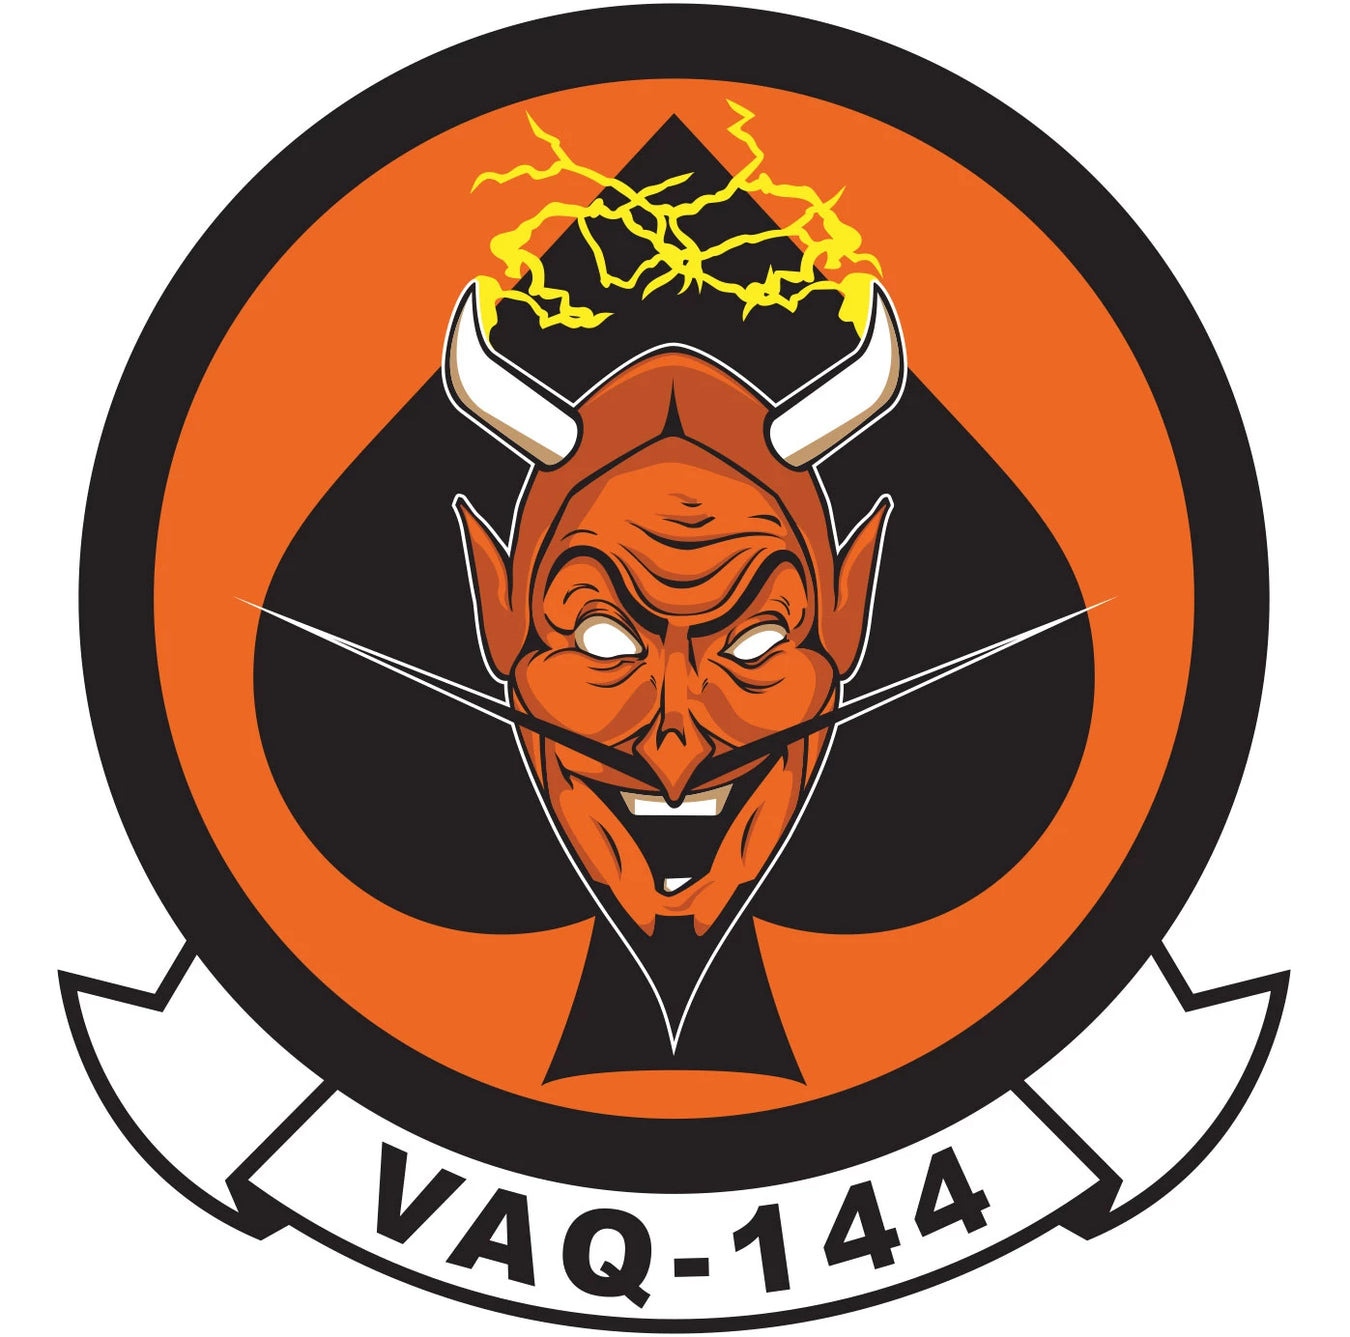 Electronic Attack Squadron 144 (VAQ-144)